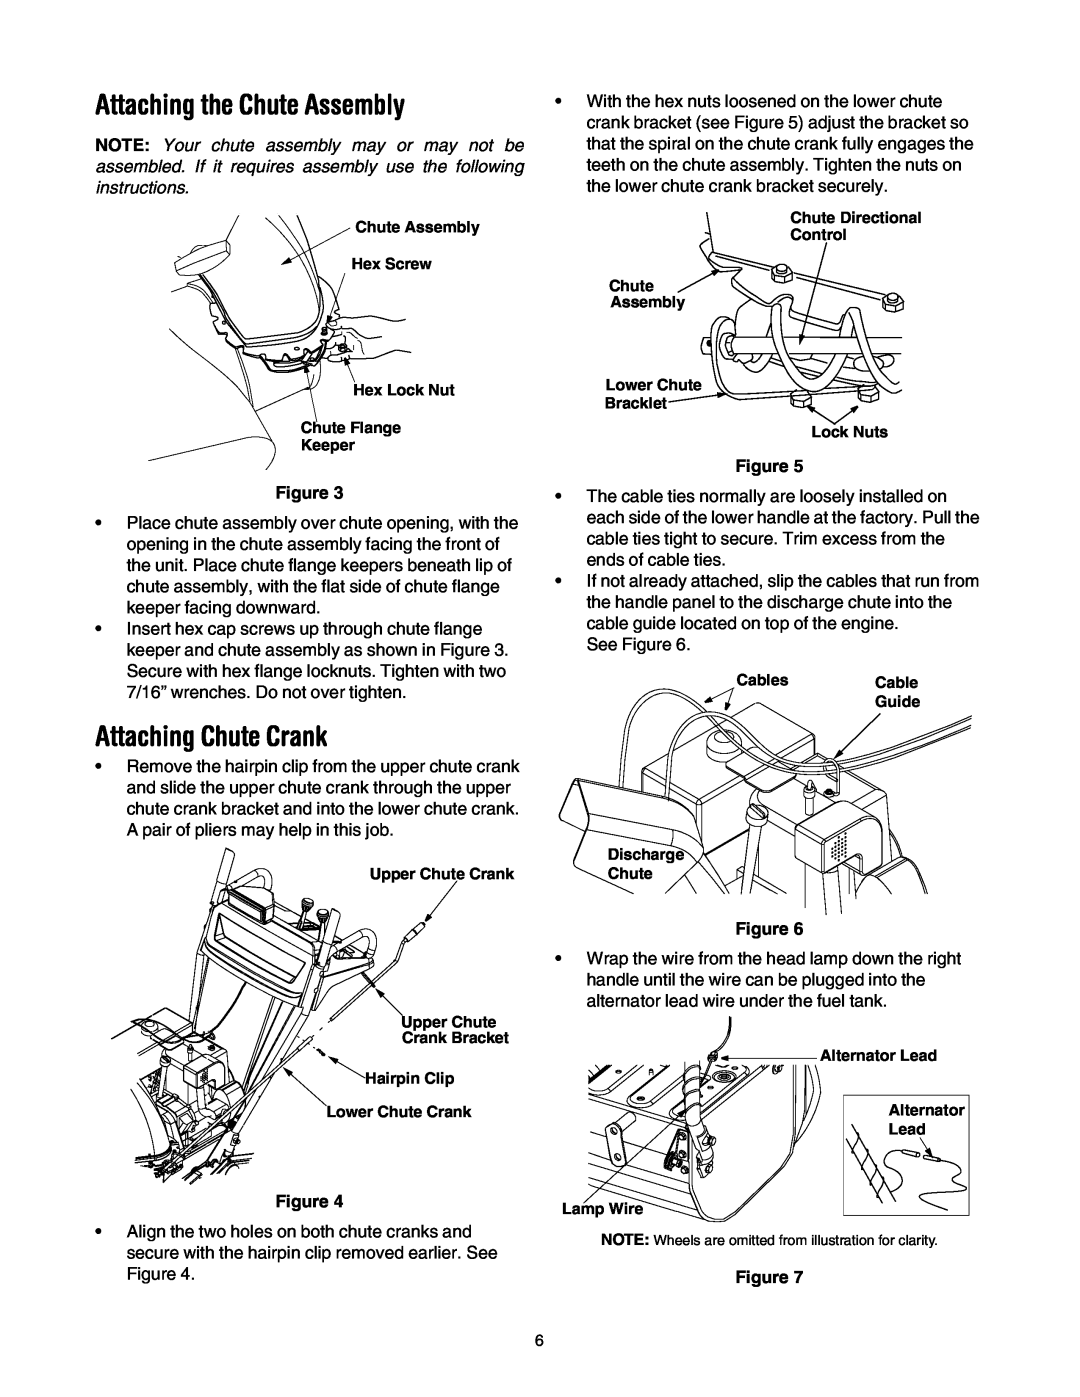 Yard-Man OGST-2806 manual Attaching the Chute Assembly, Attaching Chute Crank 